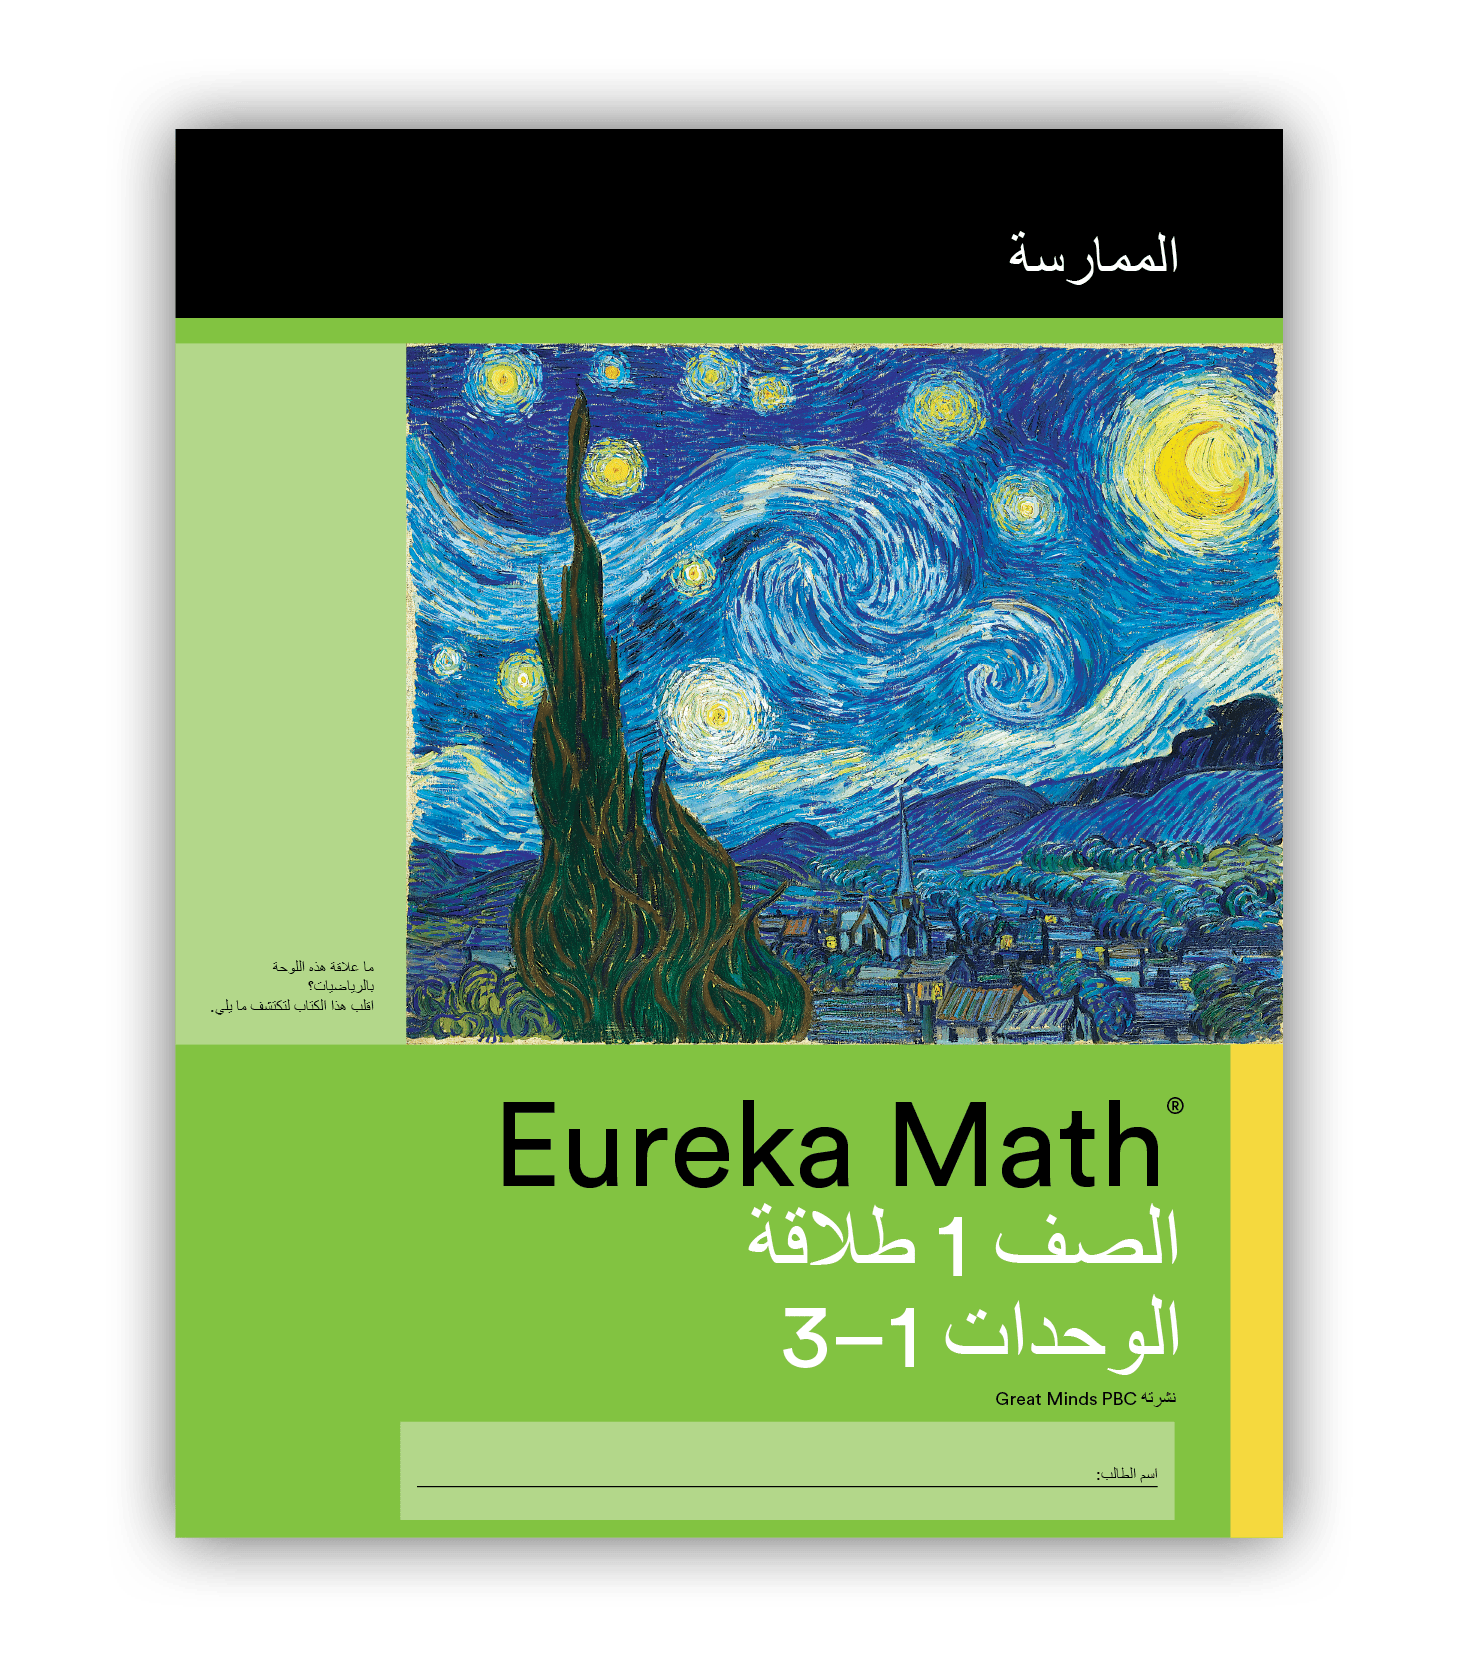 Eureka Math Practice Book in Arabic for Grade 1